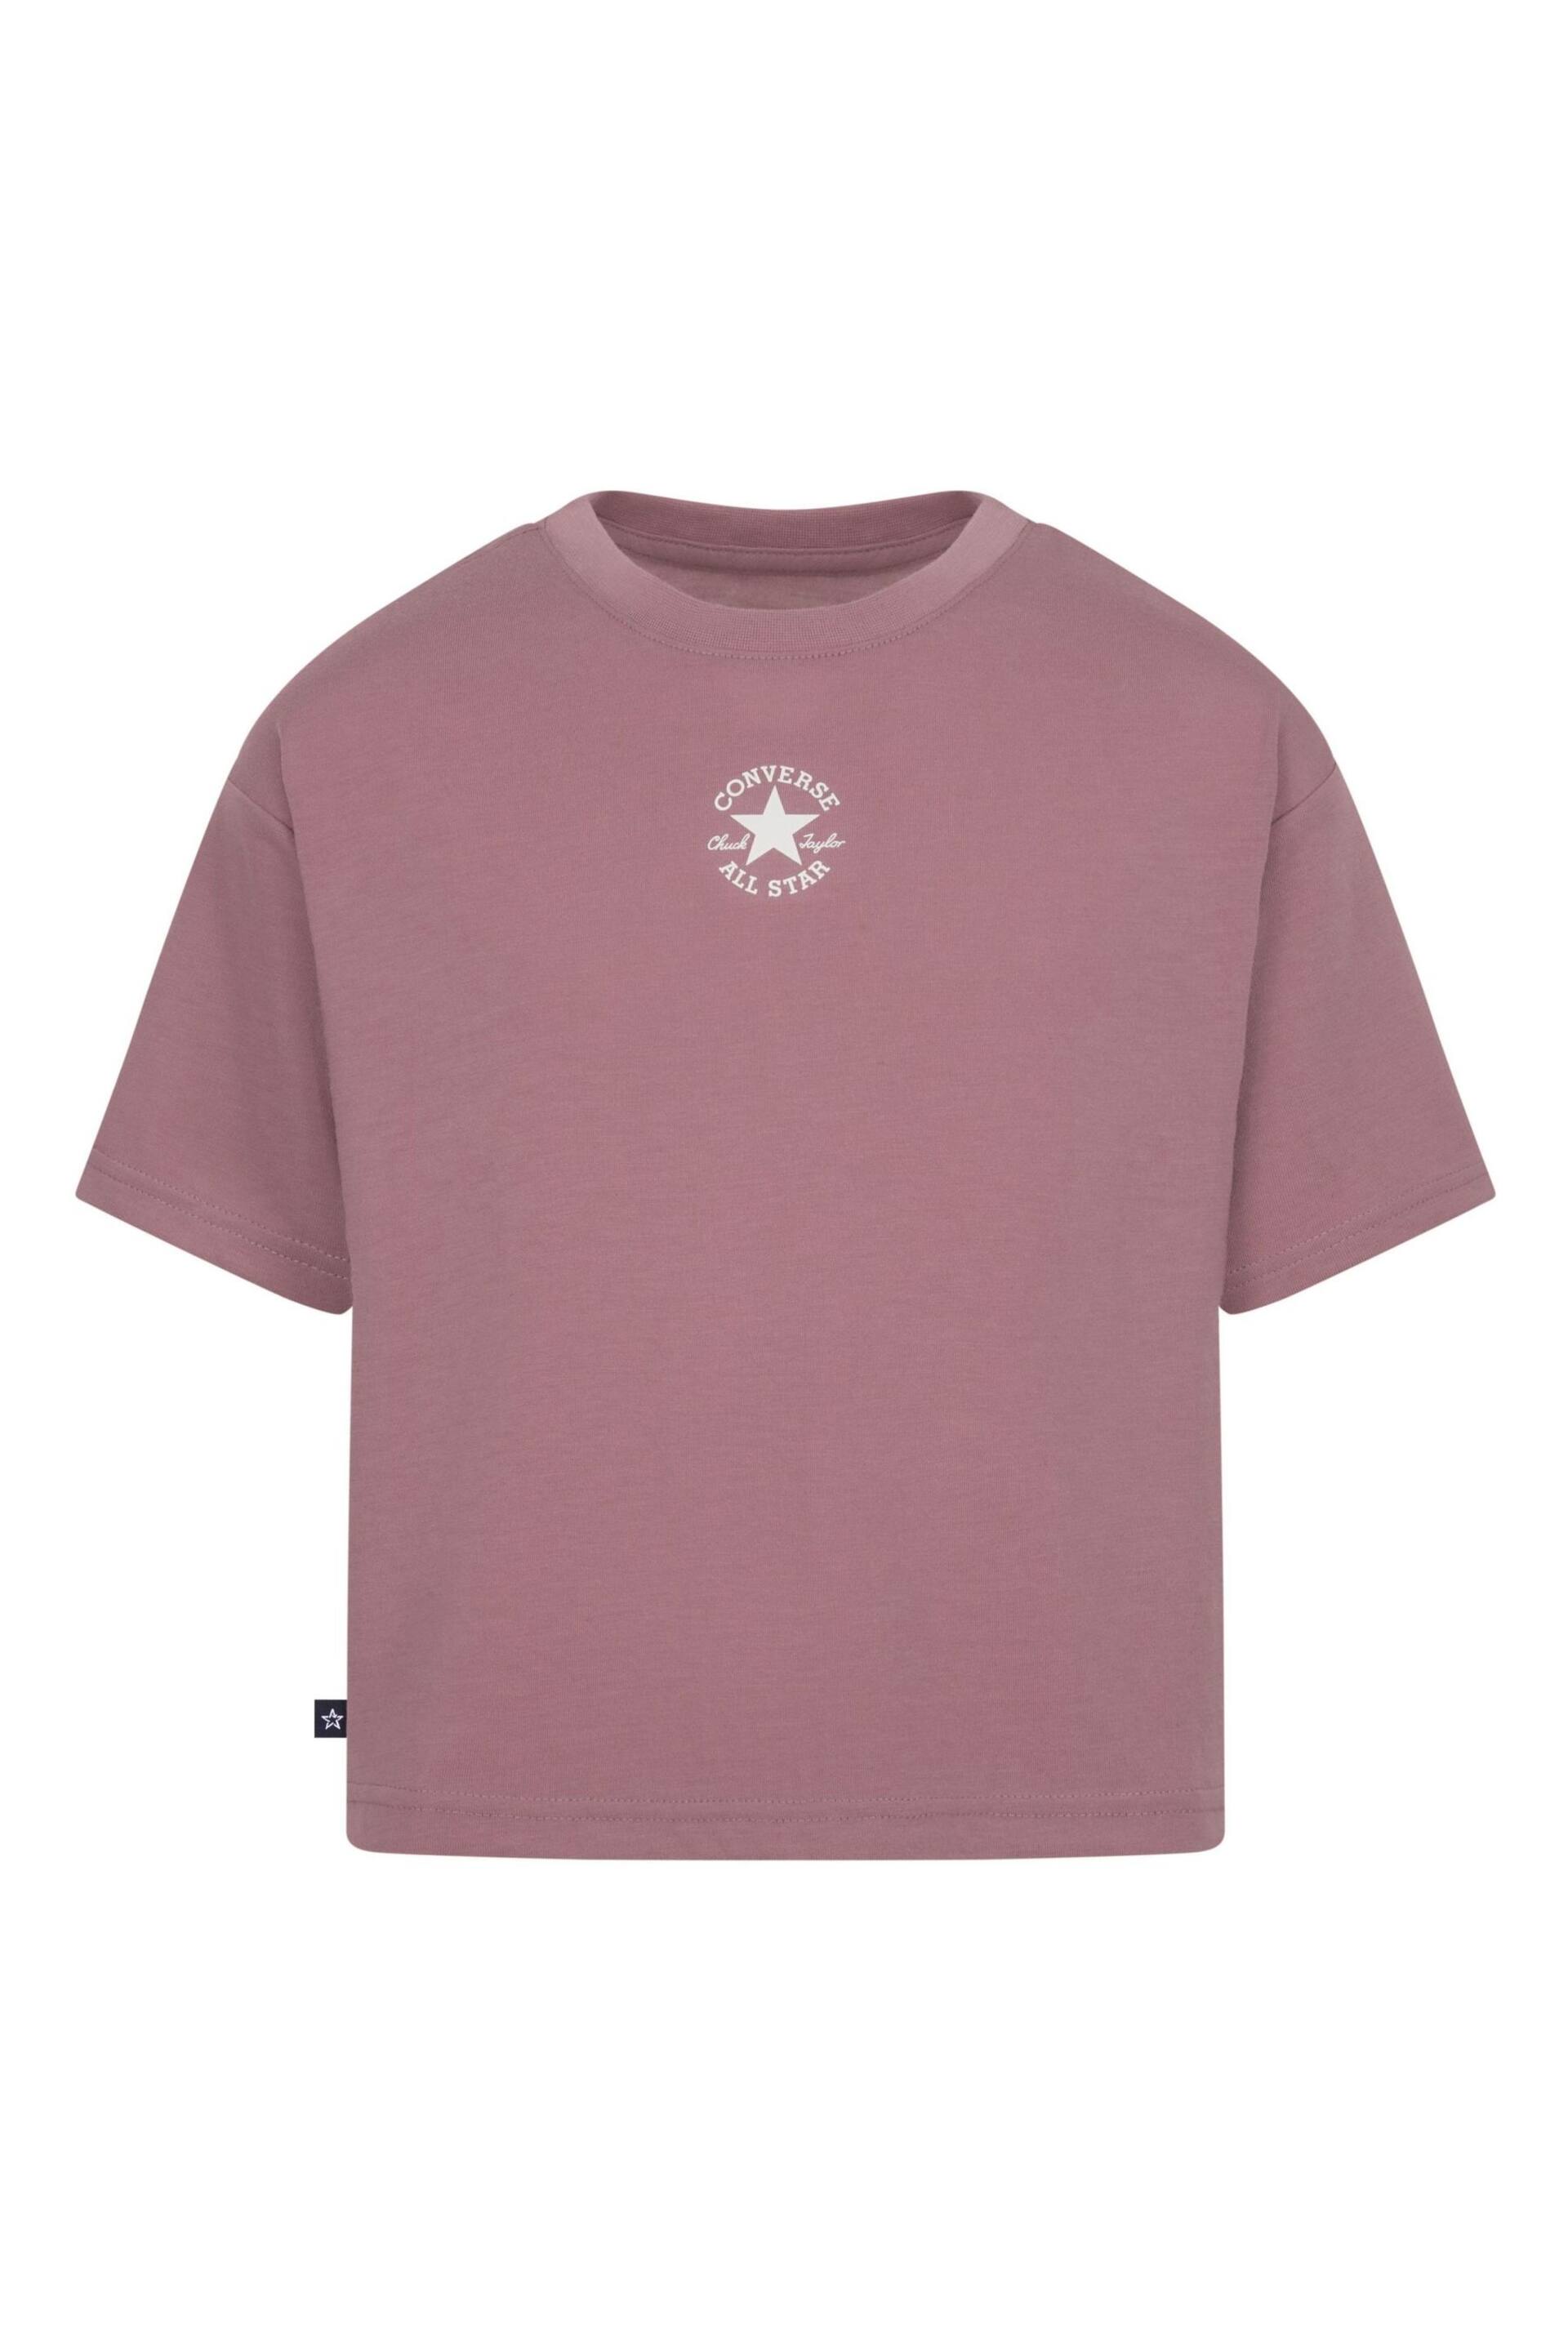 Converse Pink Oversized Chuck Patch Boxy T-Shirt - Image 1 of 4